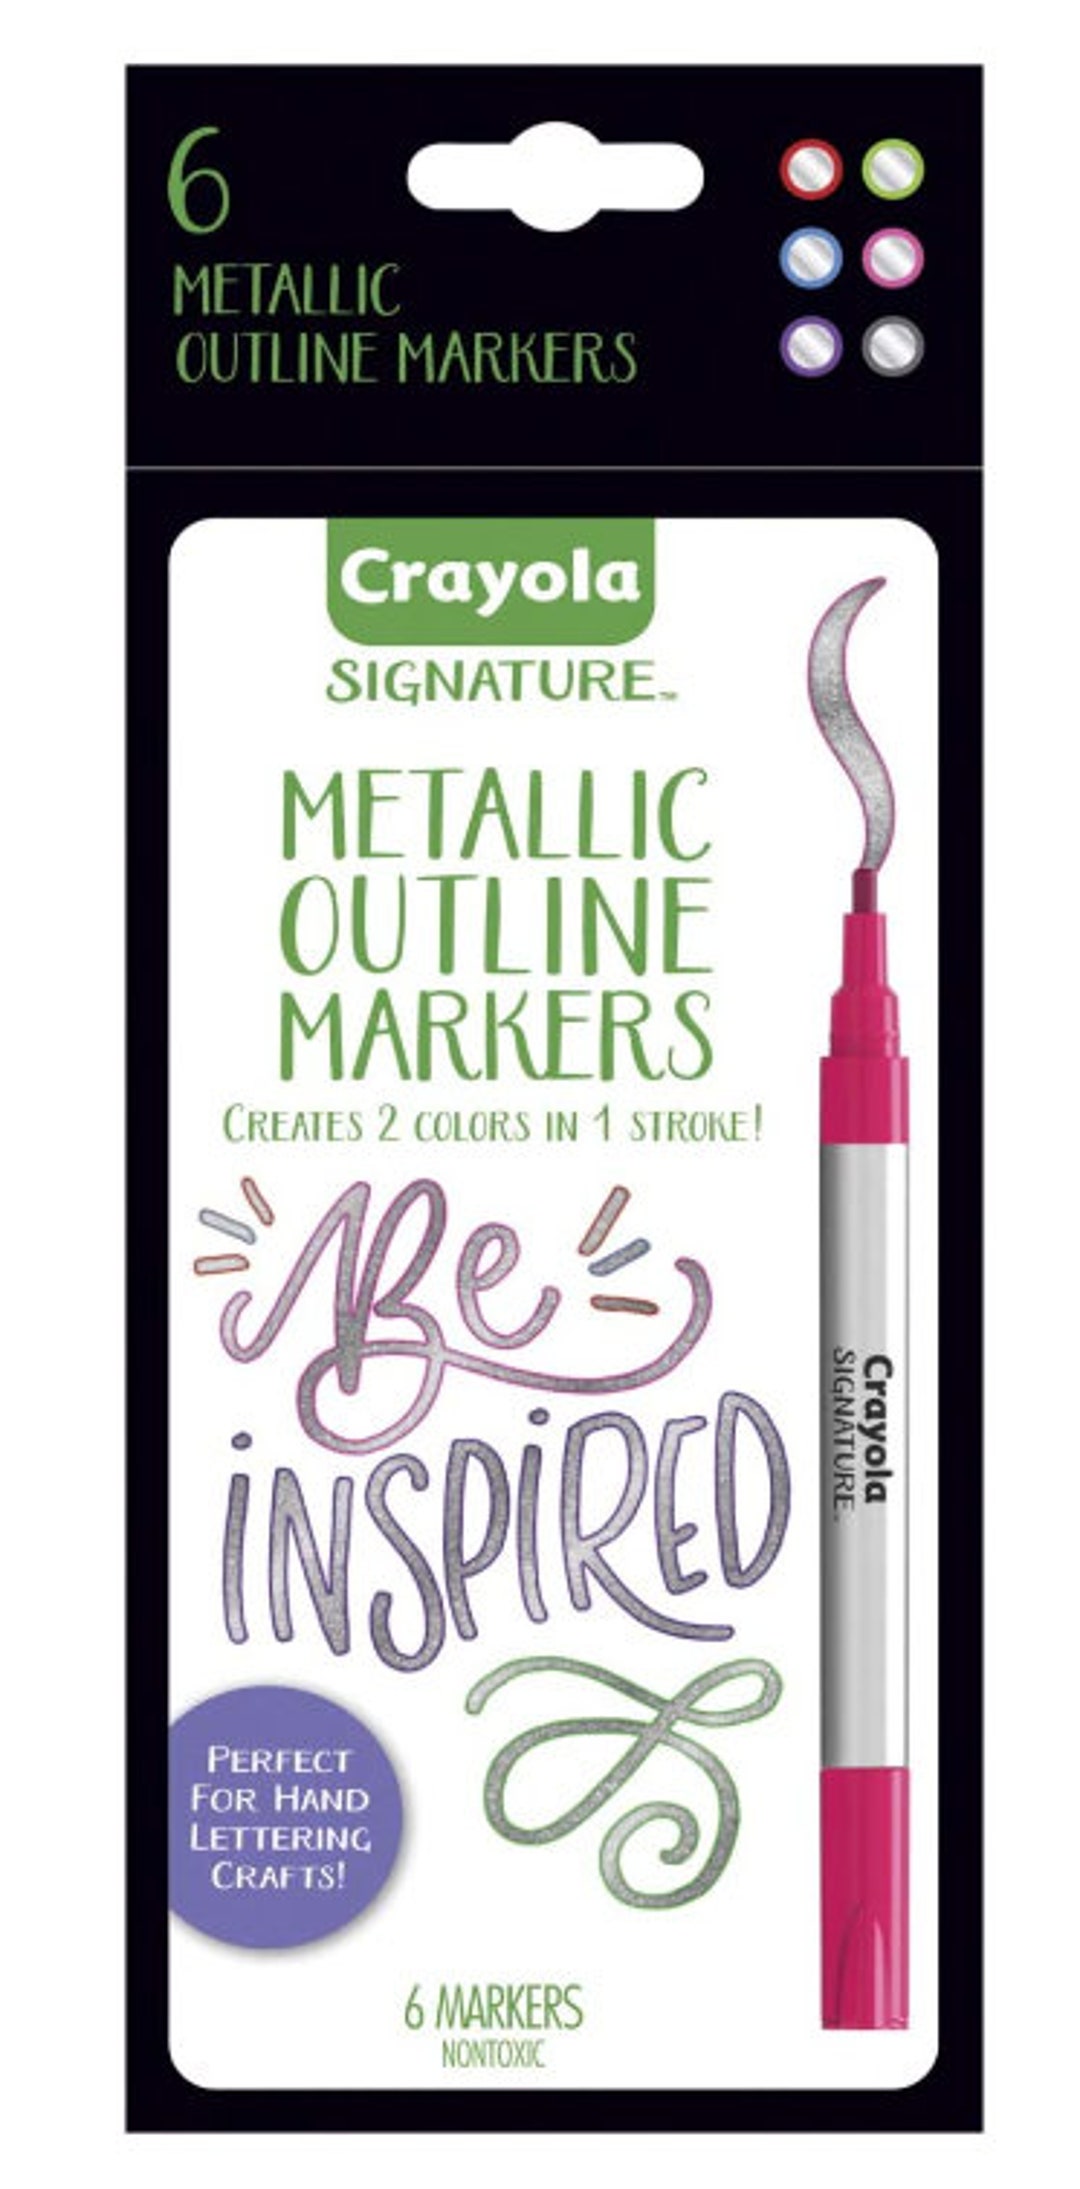 Marvy Uchida Uch4824m-2 Bistro Chalk Markers Pack, Metallic 4-Color Fine Tip (2 PK)